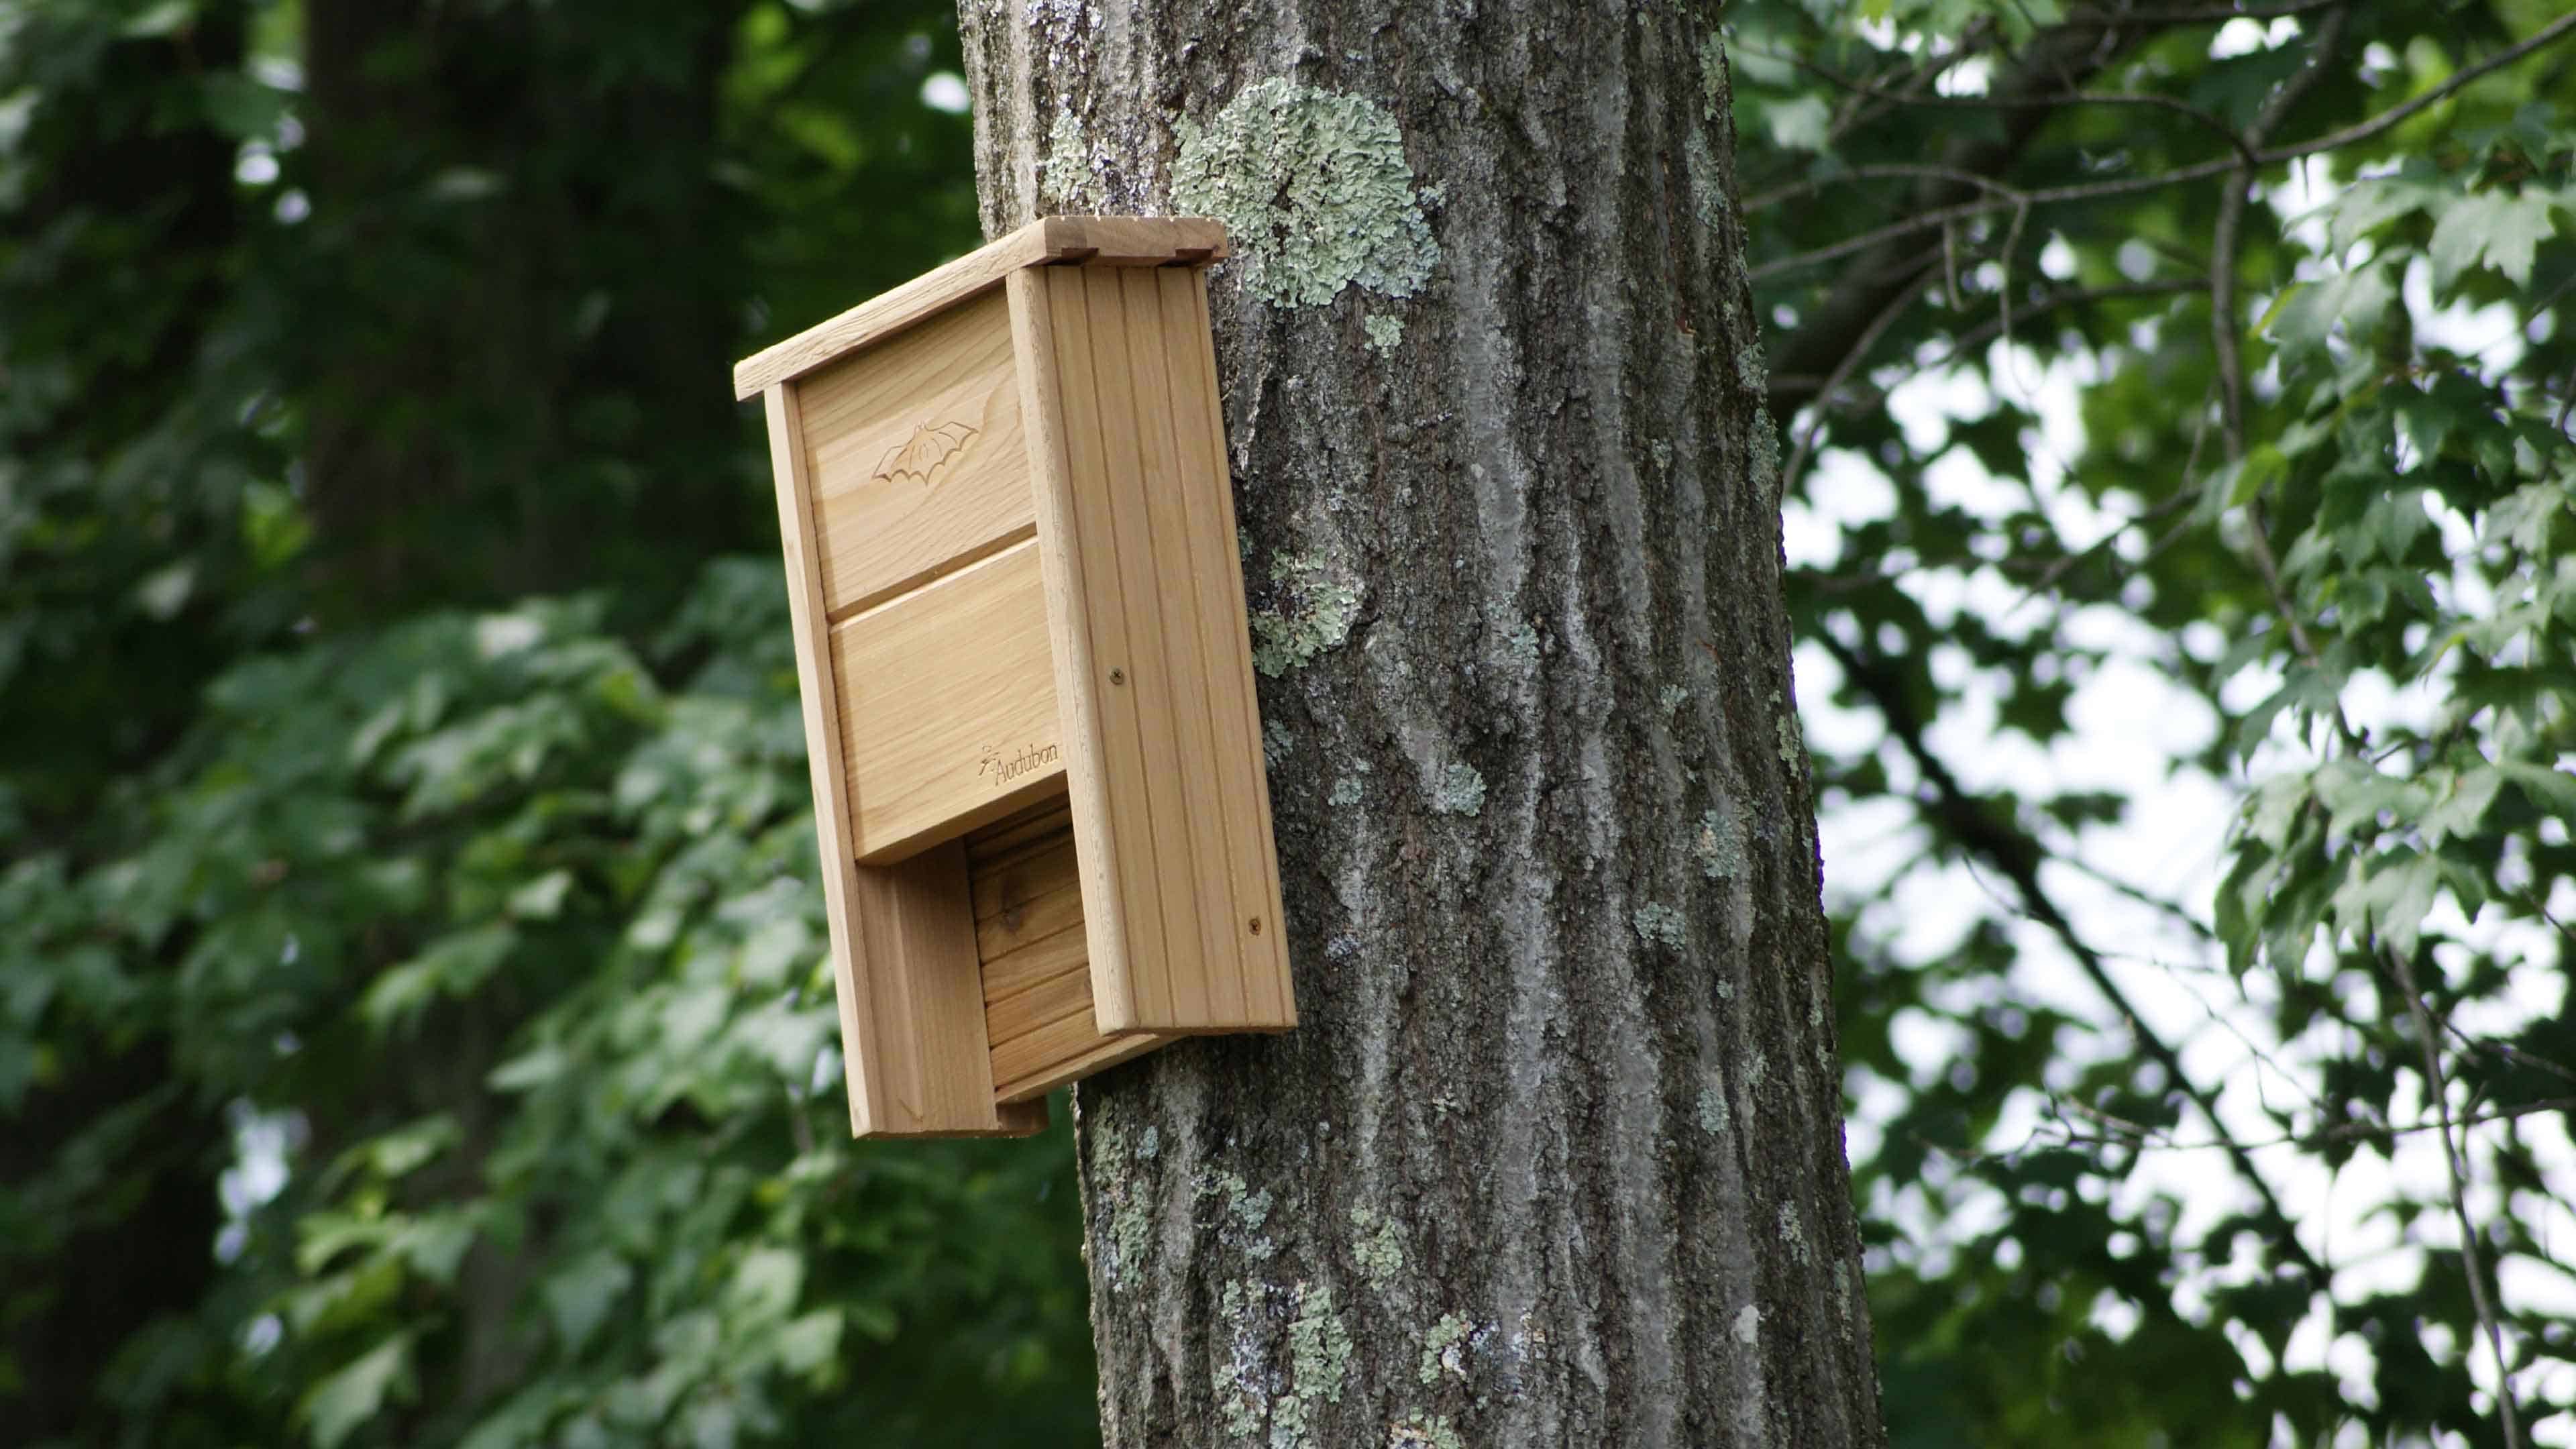 Audubon bat house installed on tree